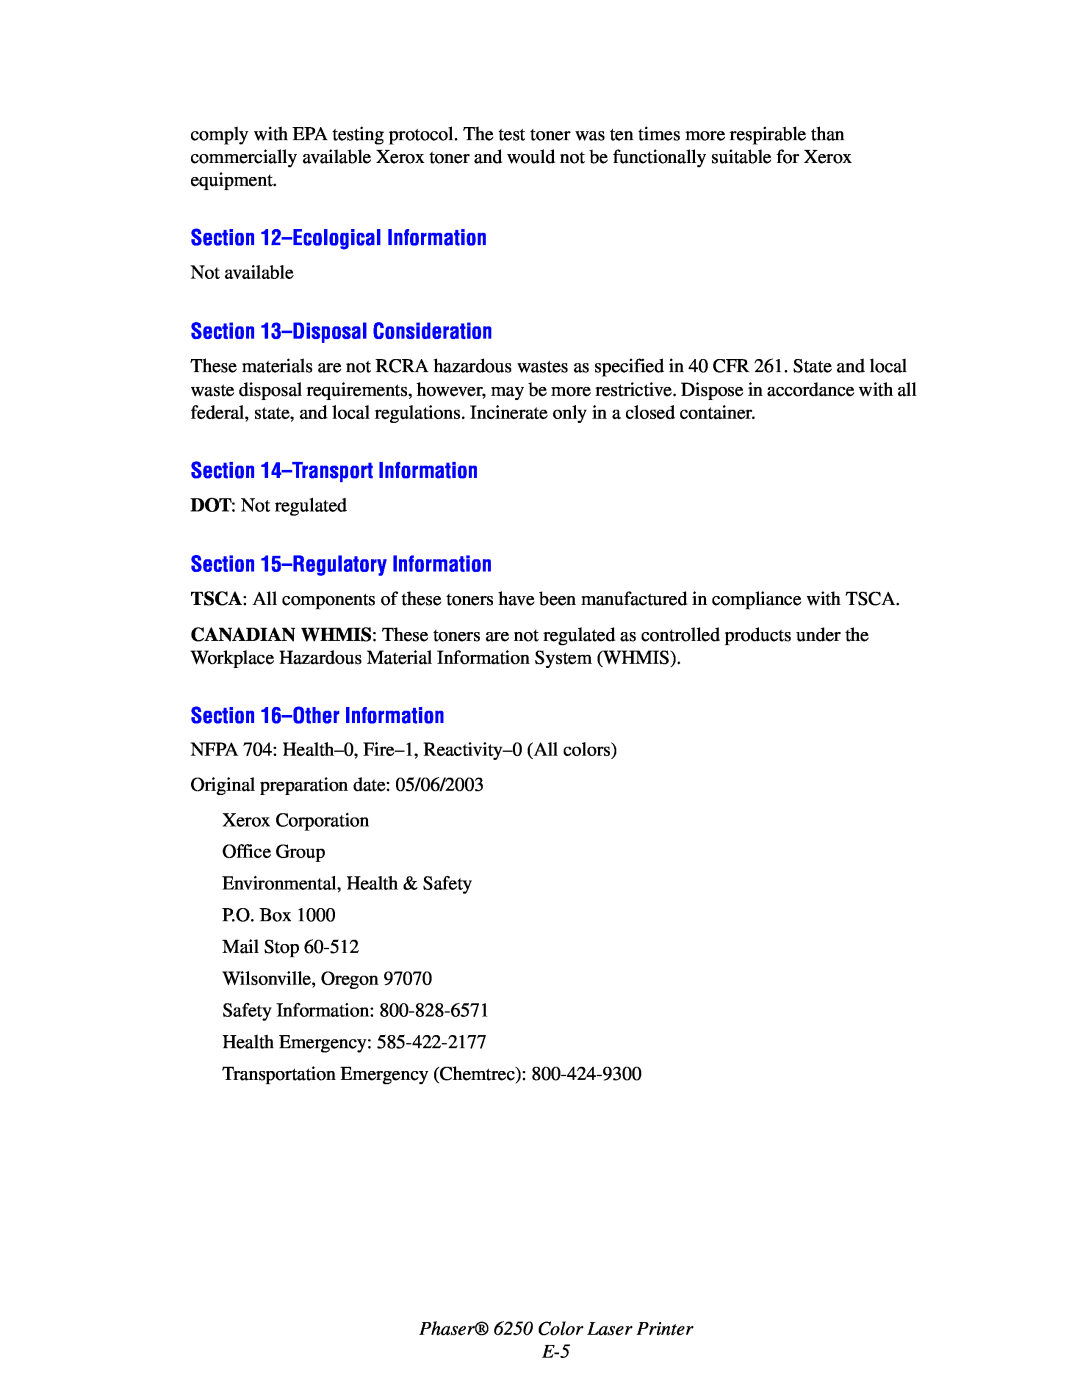 Xerox 6250 manual Ecological Information, Disposal Consideration, Transport Information, Regulatory Information 